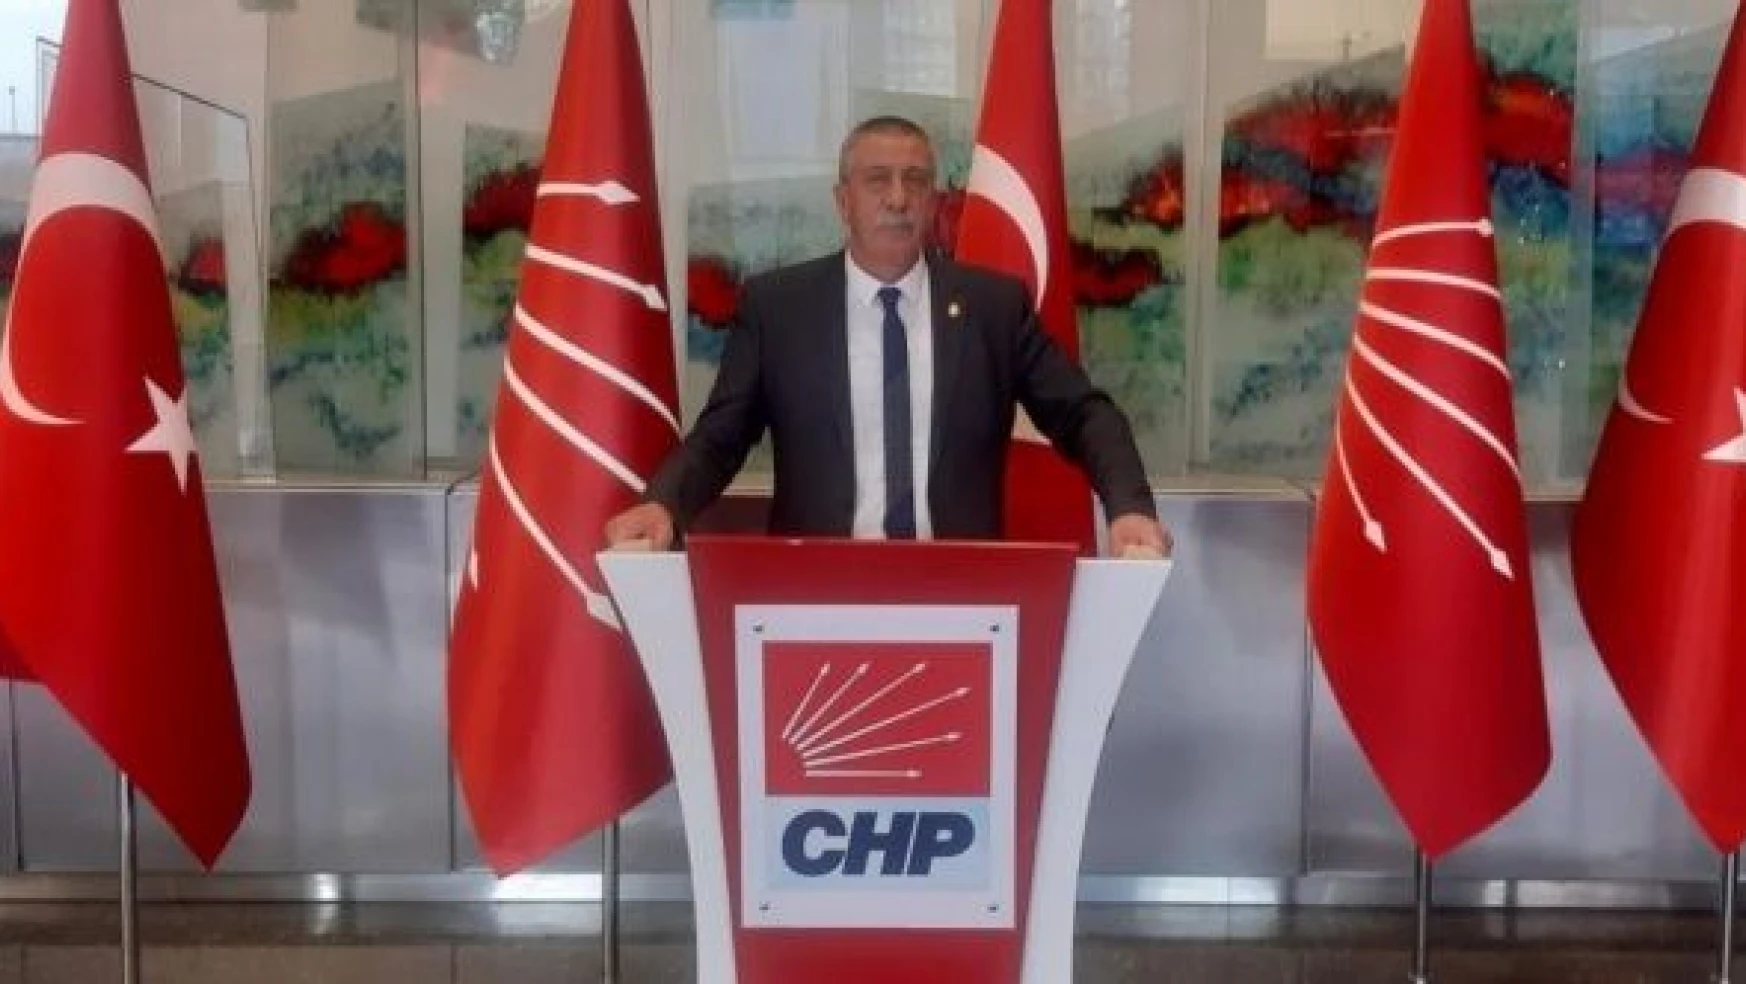 CHP İlçe Başkanının ehliyetine el konuldu iddiası